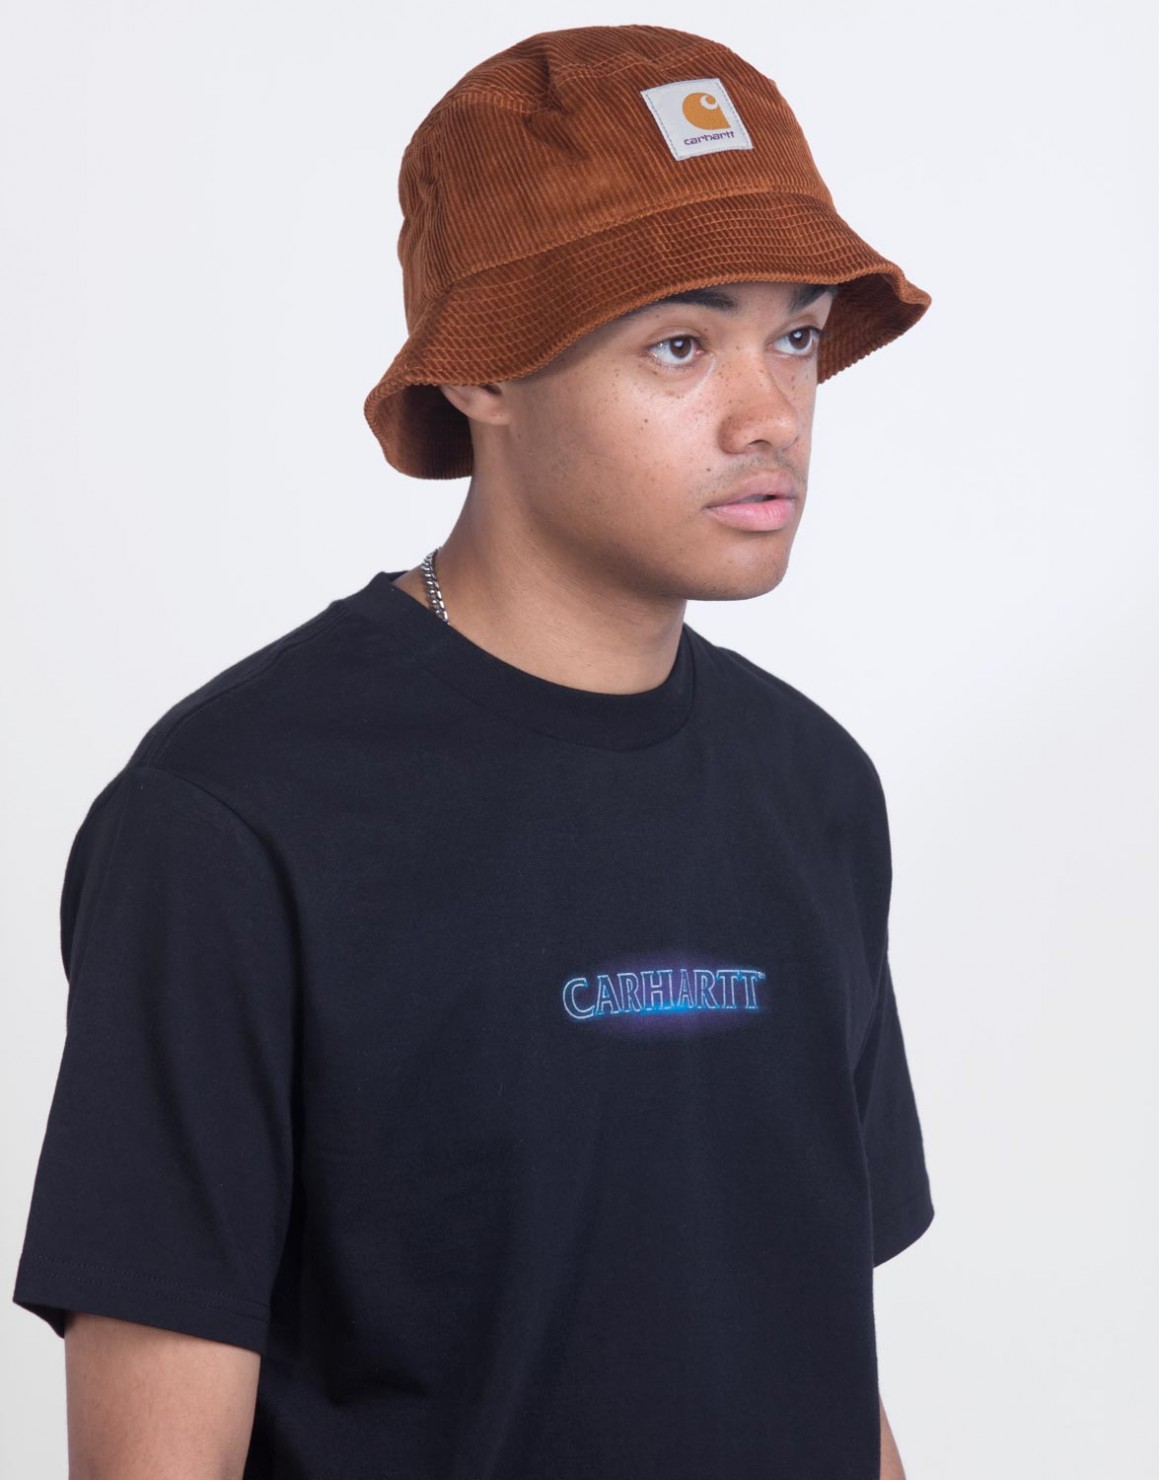 Cord Bucket Hat